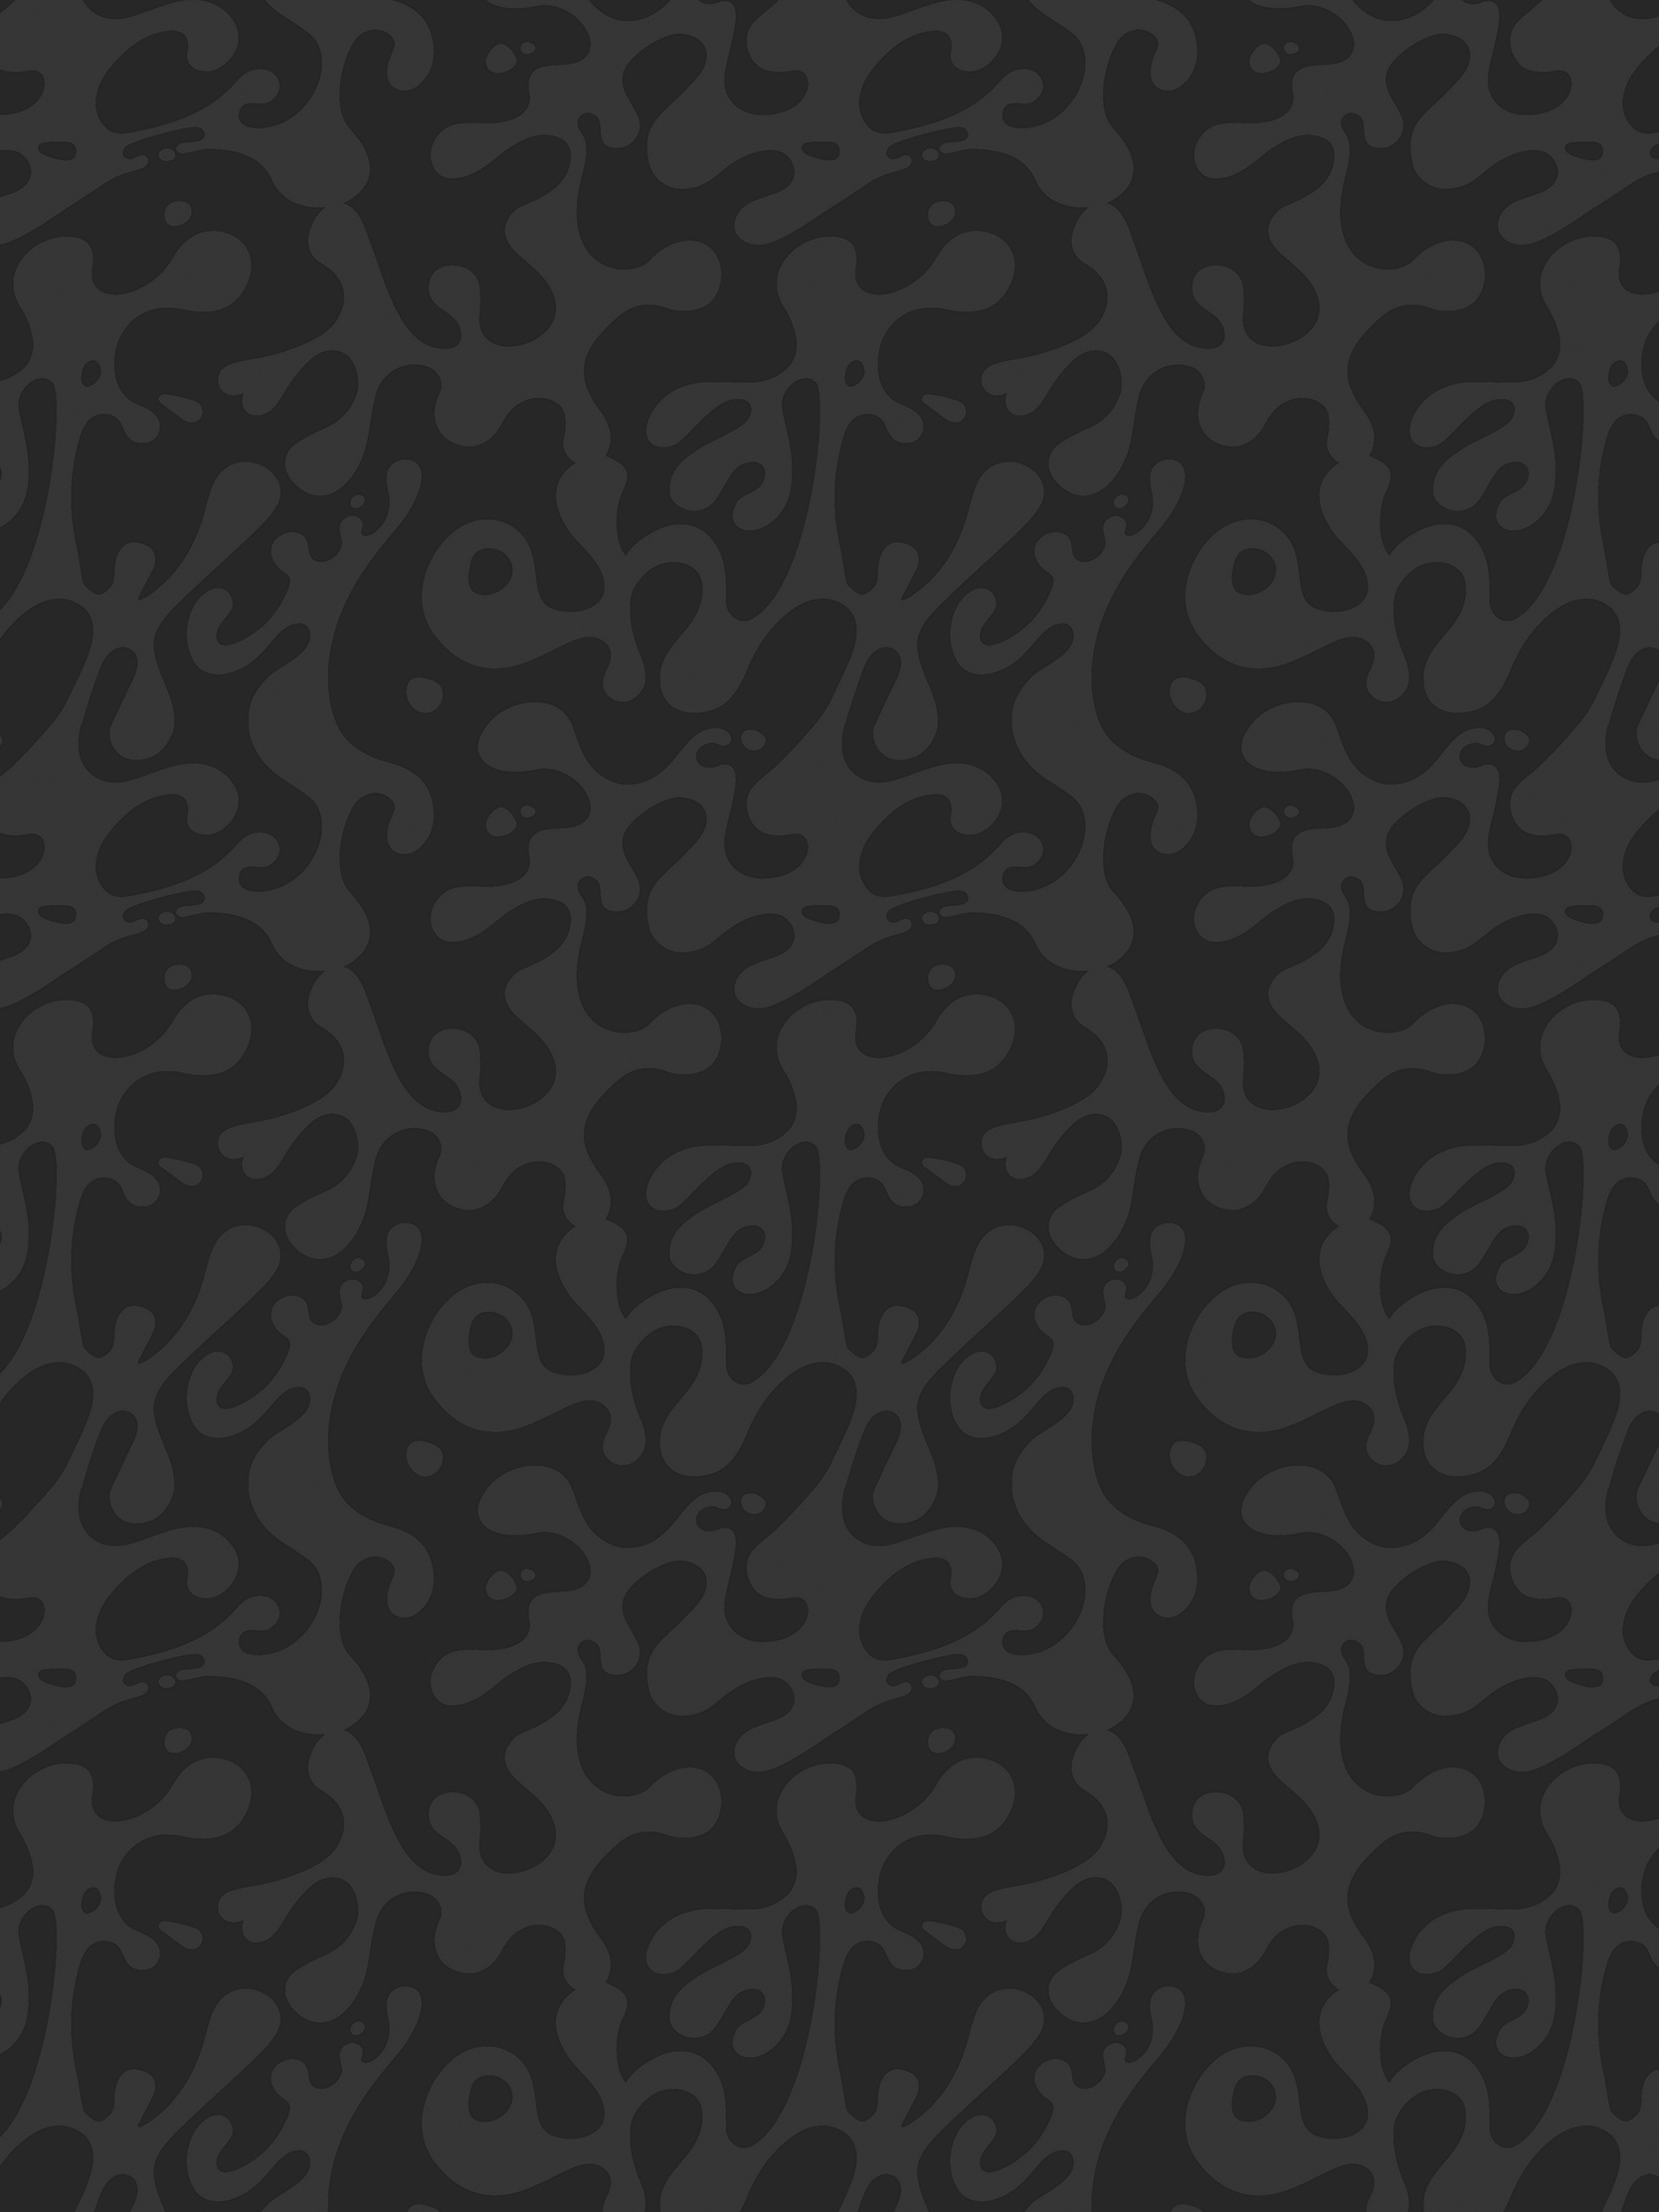 Splatoon 3 Pattern Version 5 Wallpaper - Cat with Monocle